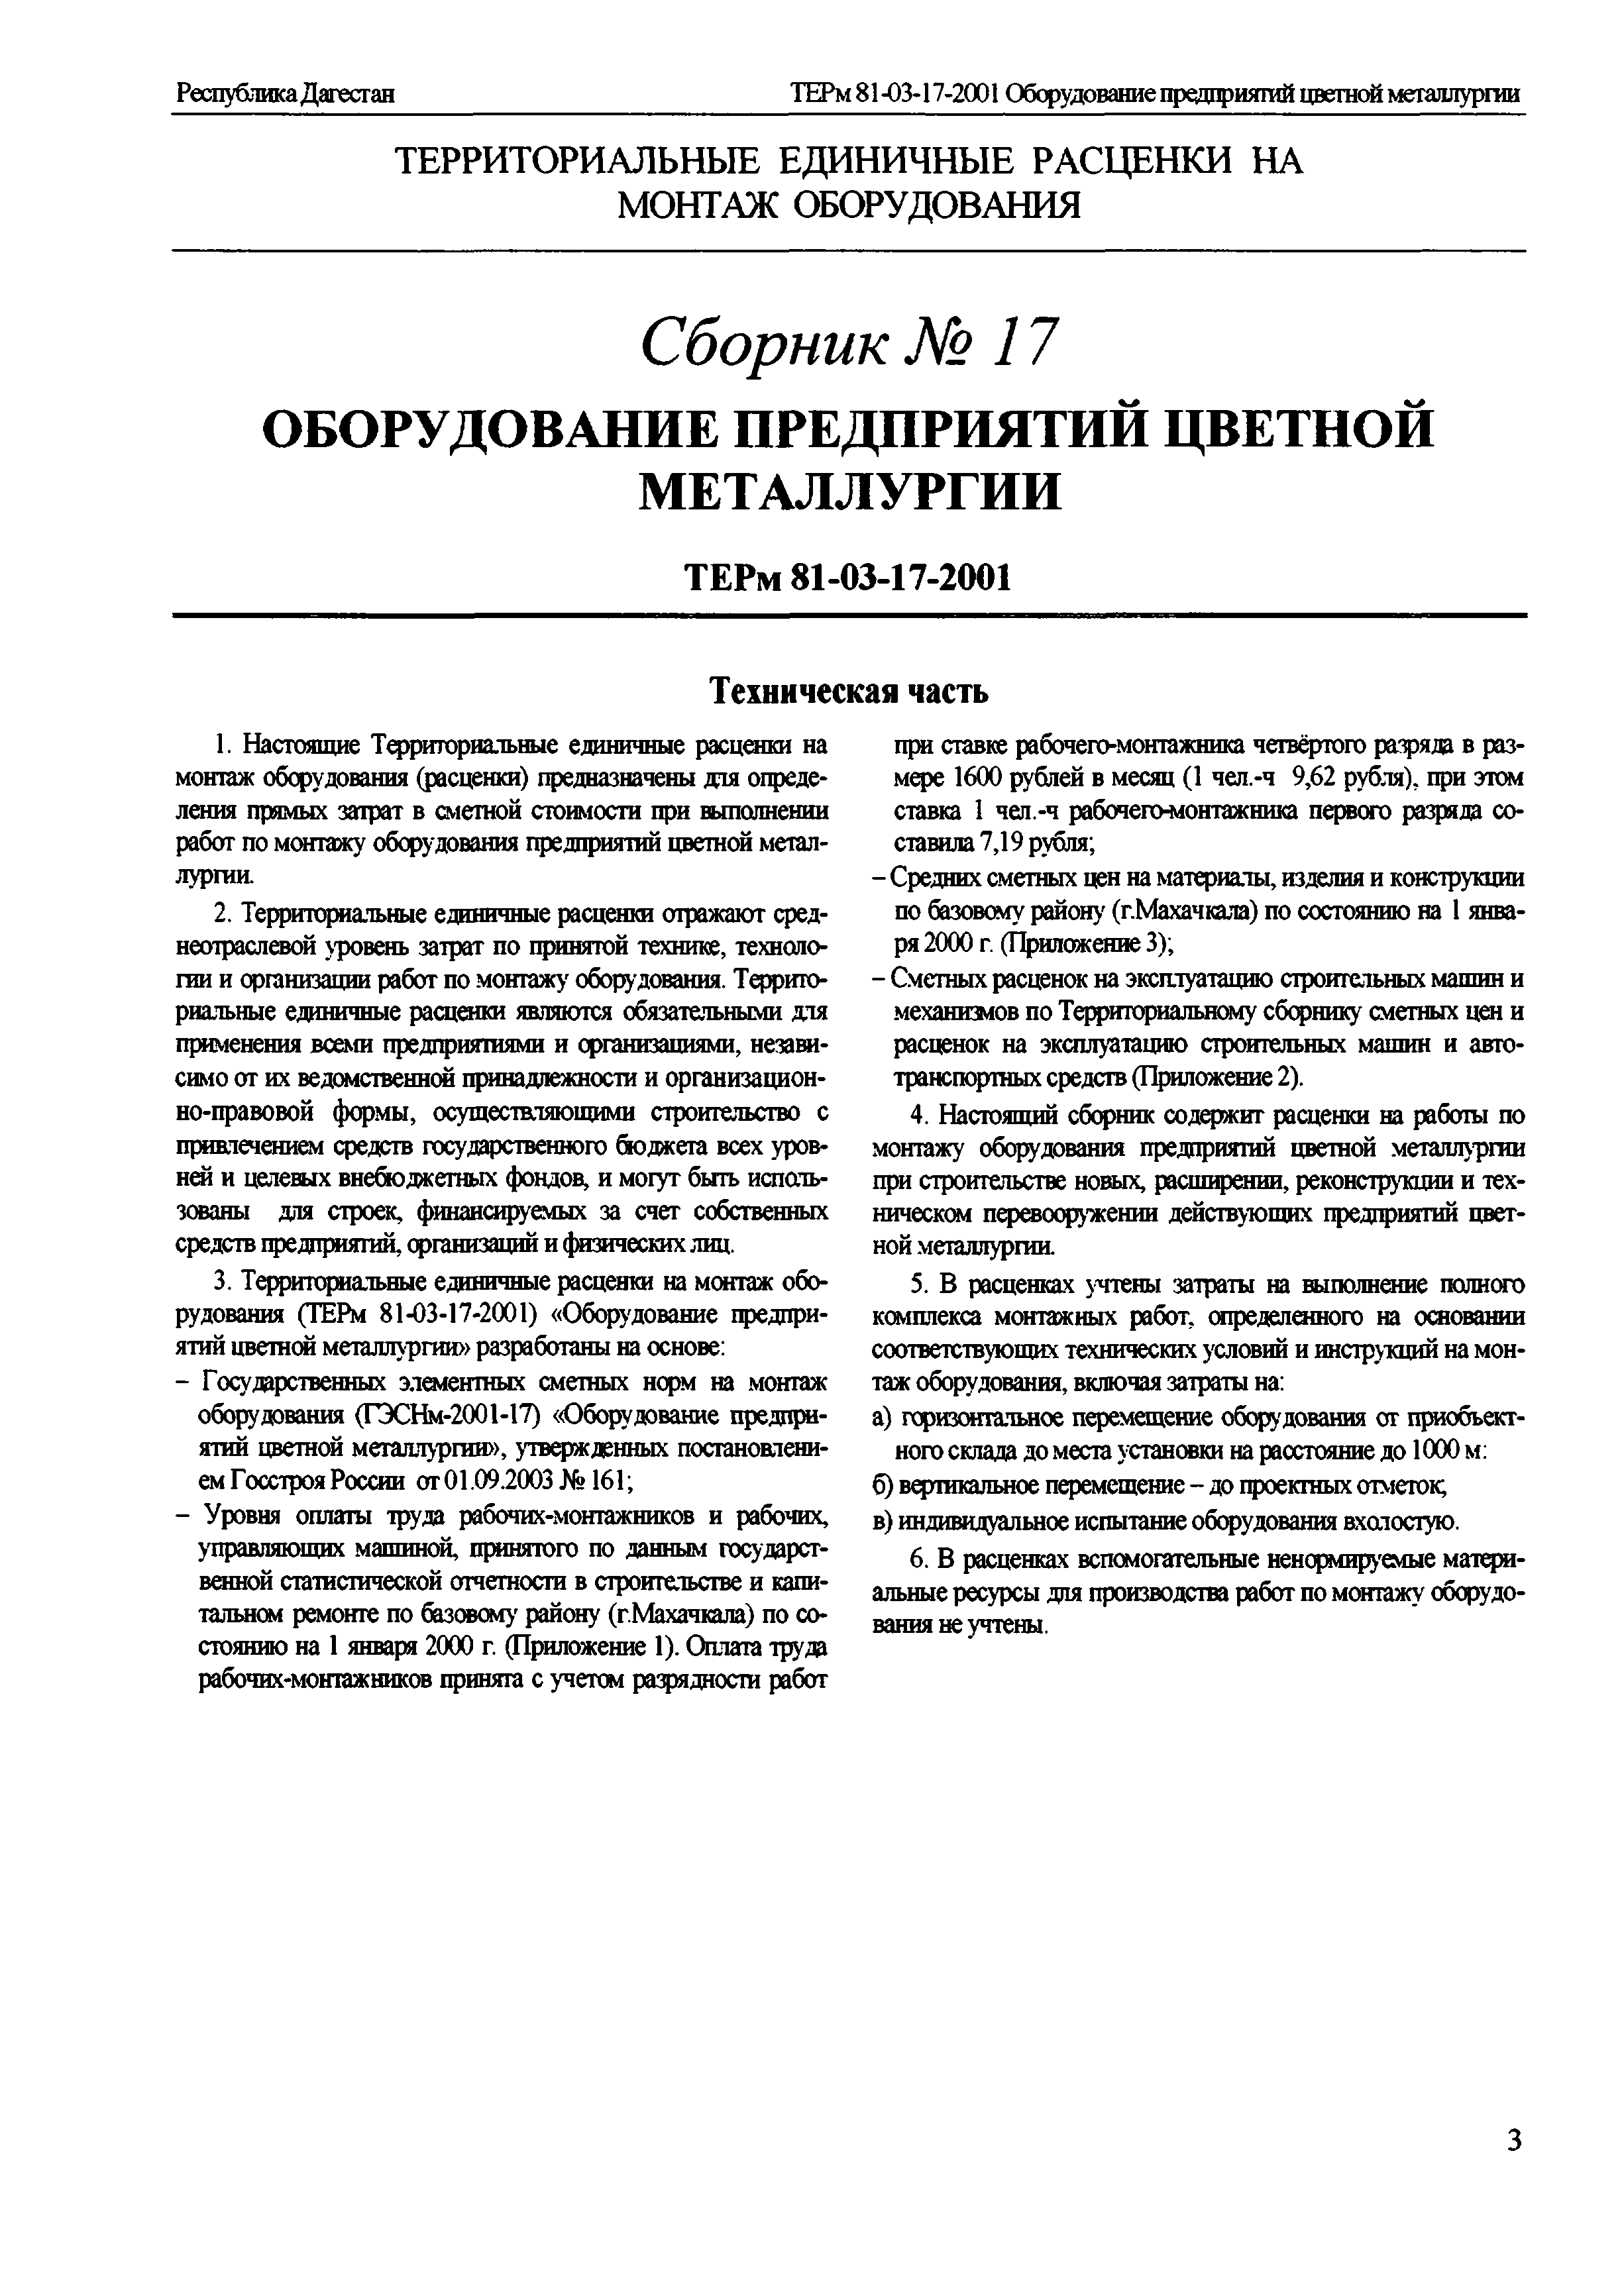 ТЕРм Республика Дагестан 2001-17